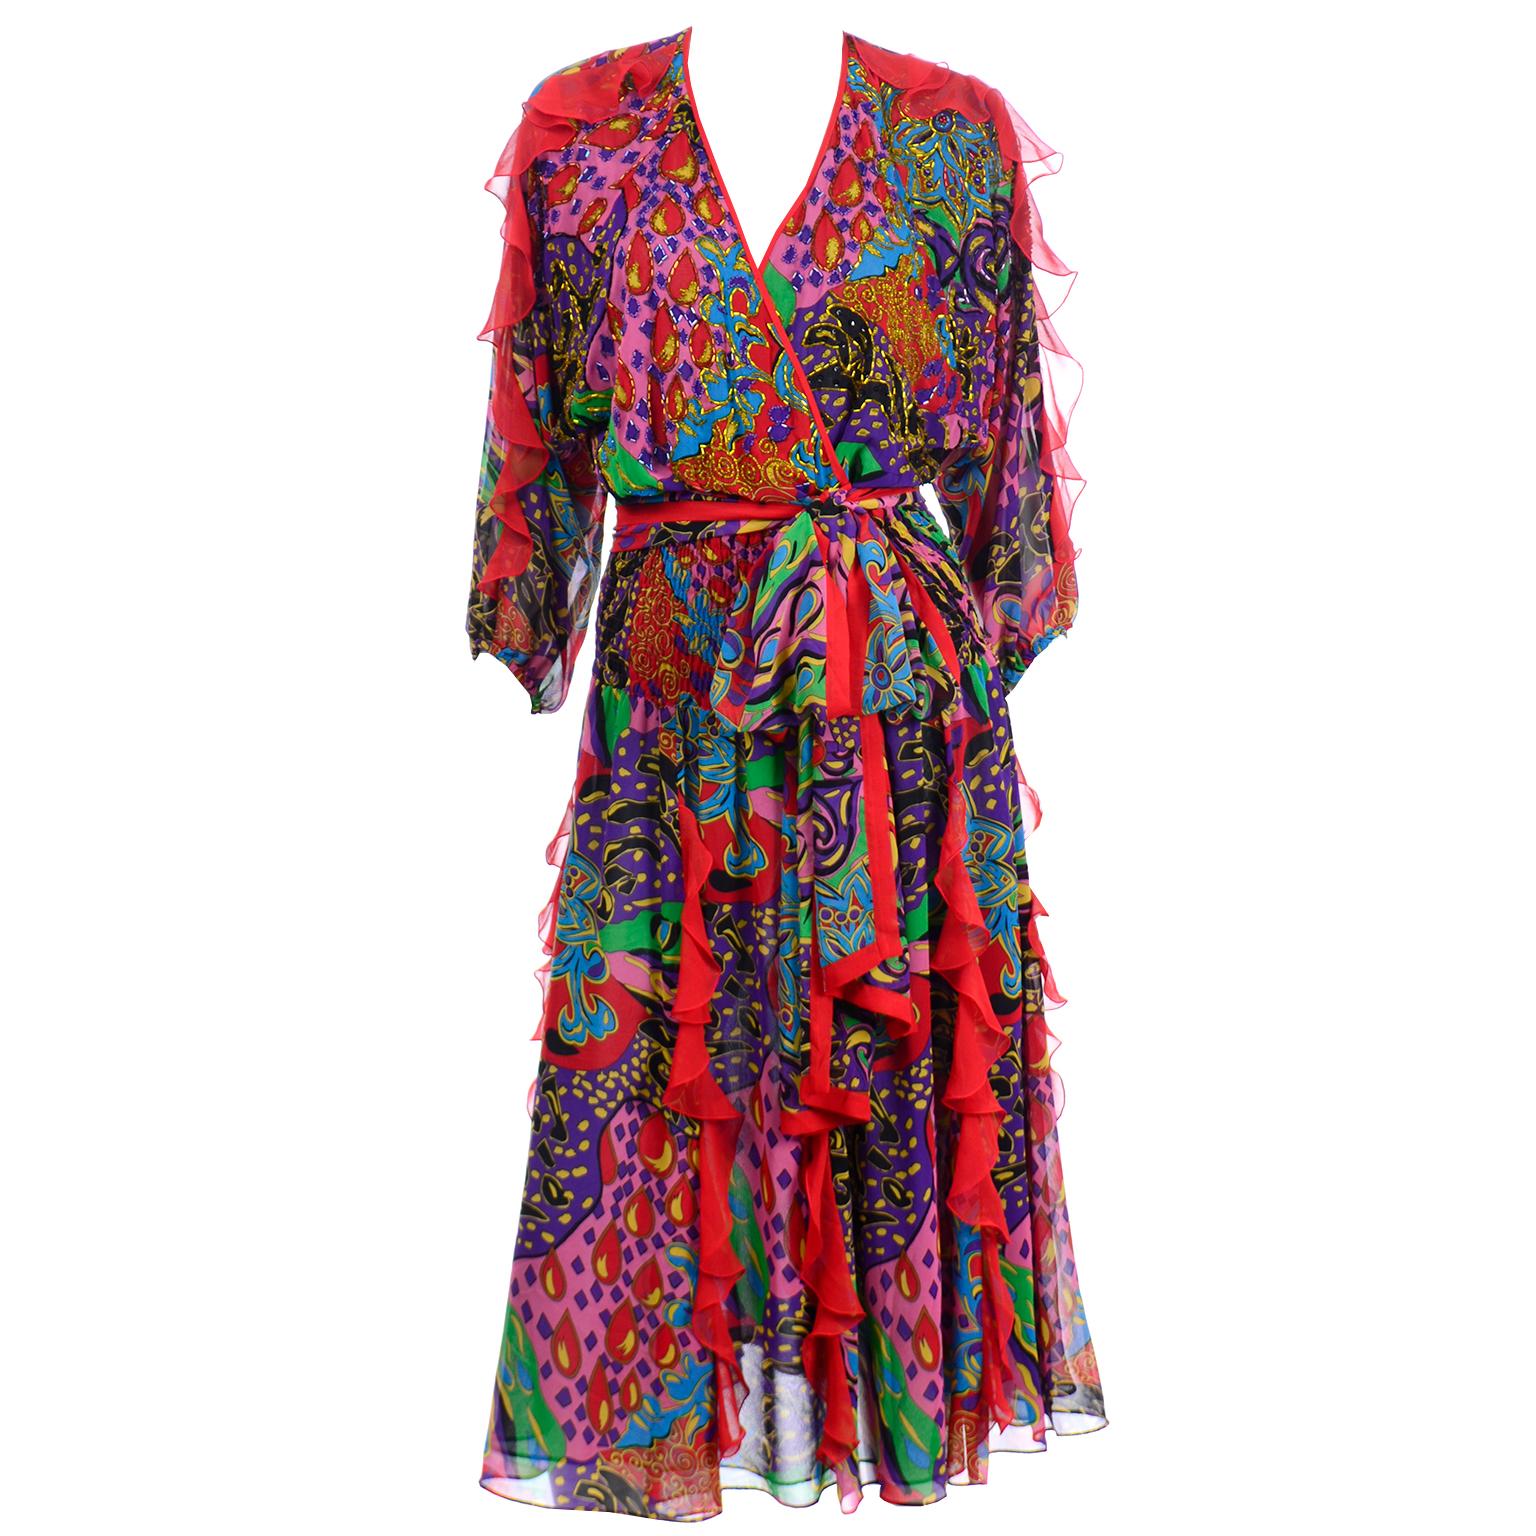 Diane Freis Multi Colored Bold Print Beaded Vintage Dress w Ruffled Sleeves